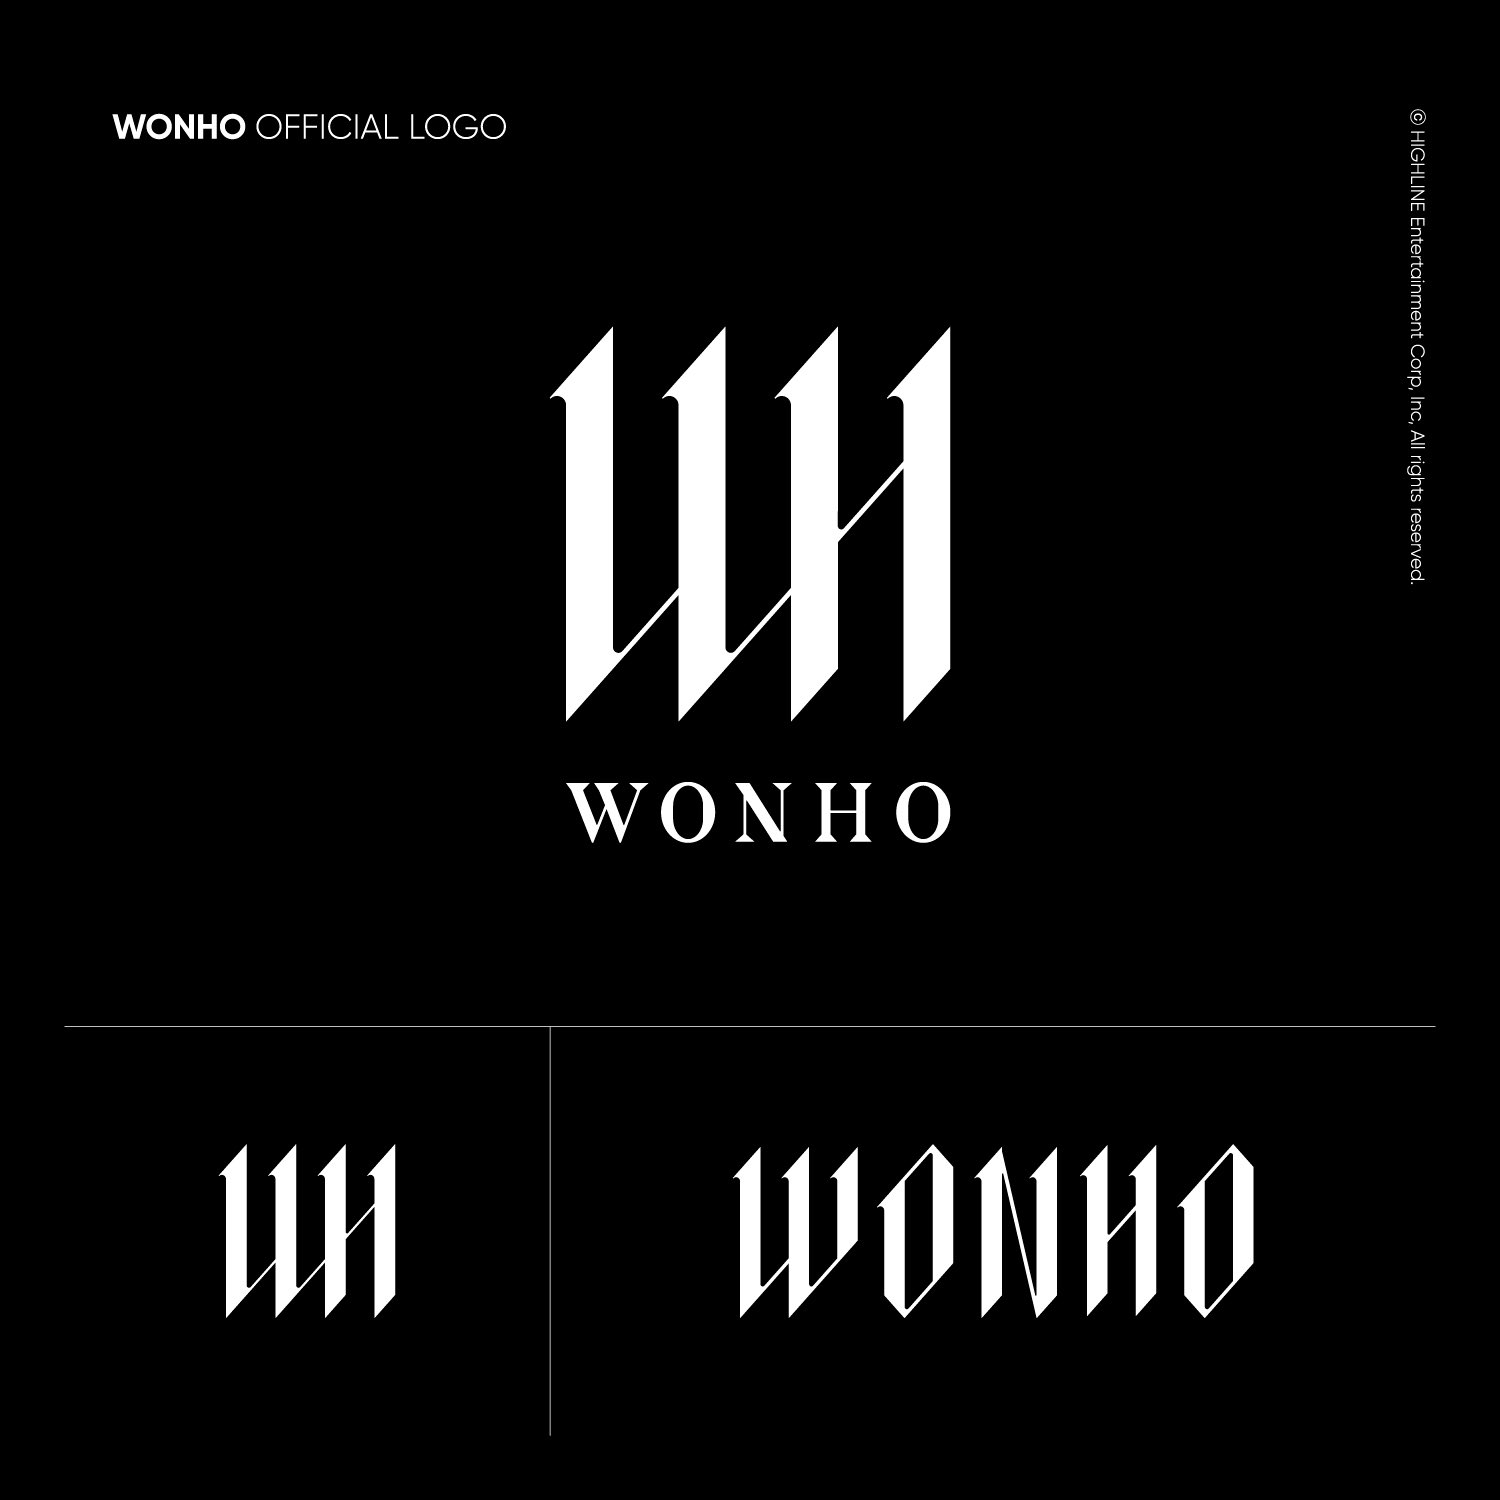 wonho-to-release-first-mini-album-part1-love-synonym-on-september-4-5